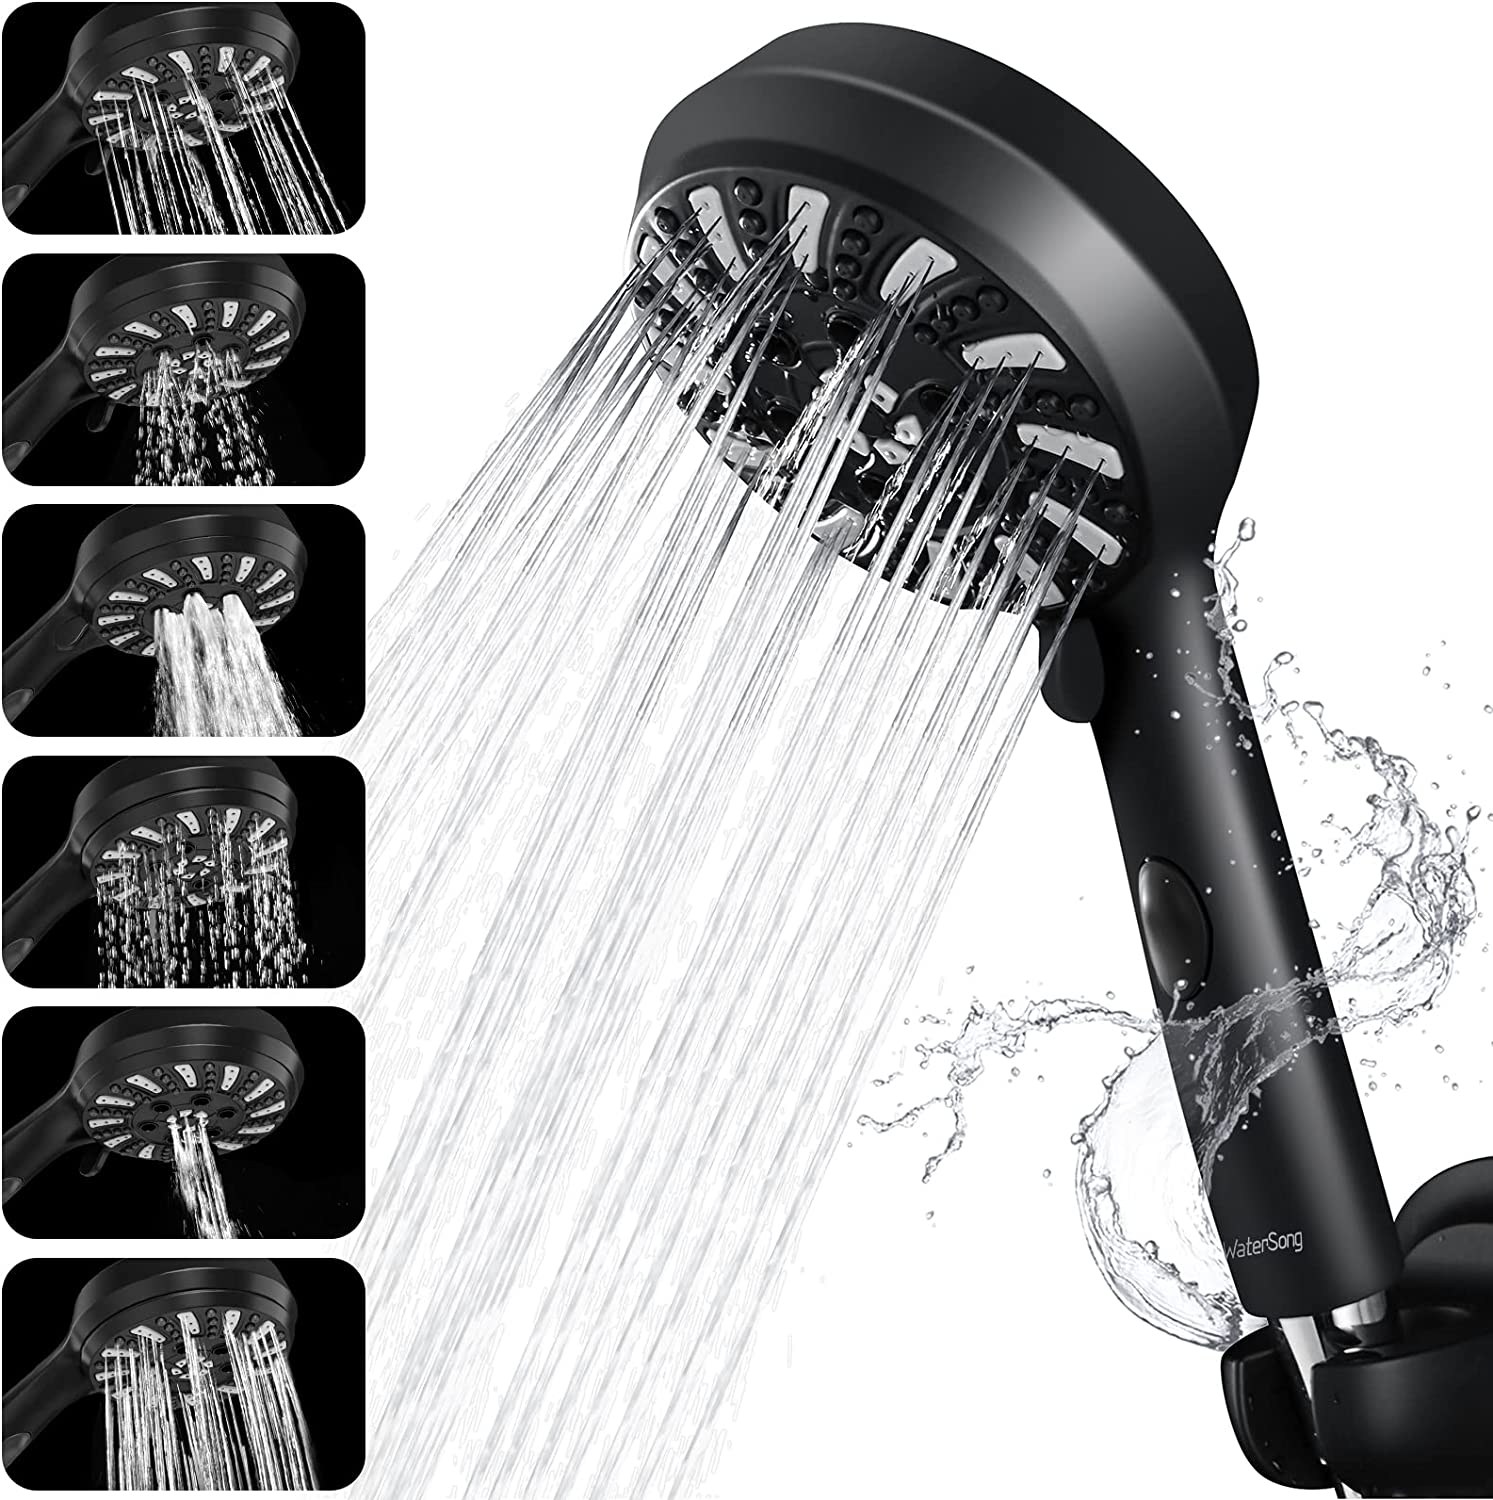 WaterSong Handheld Shower Head